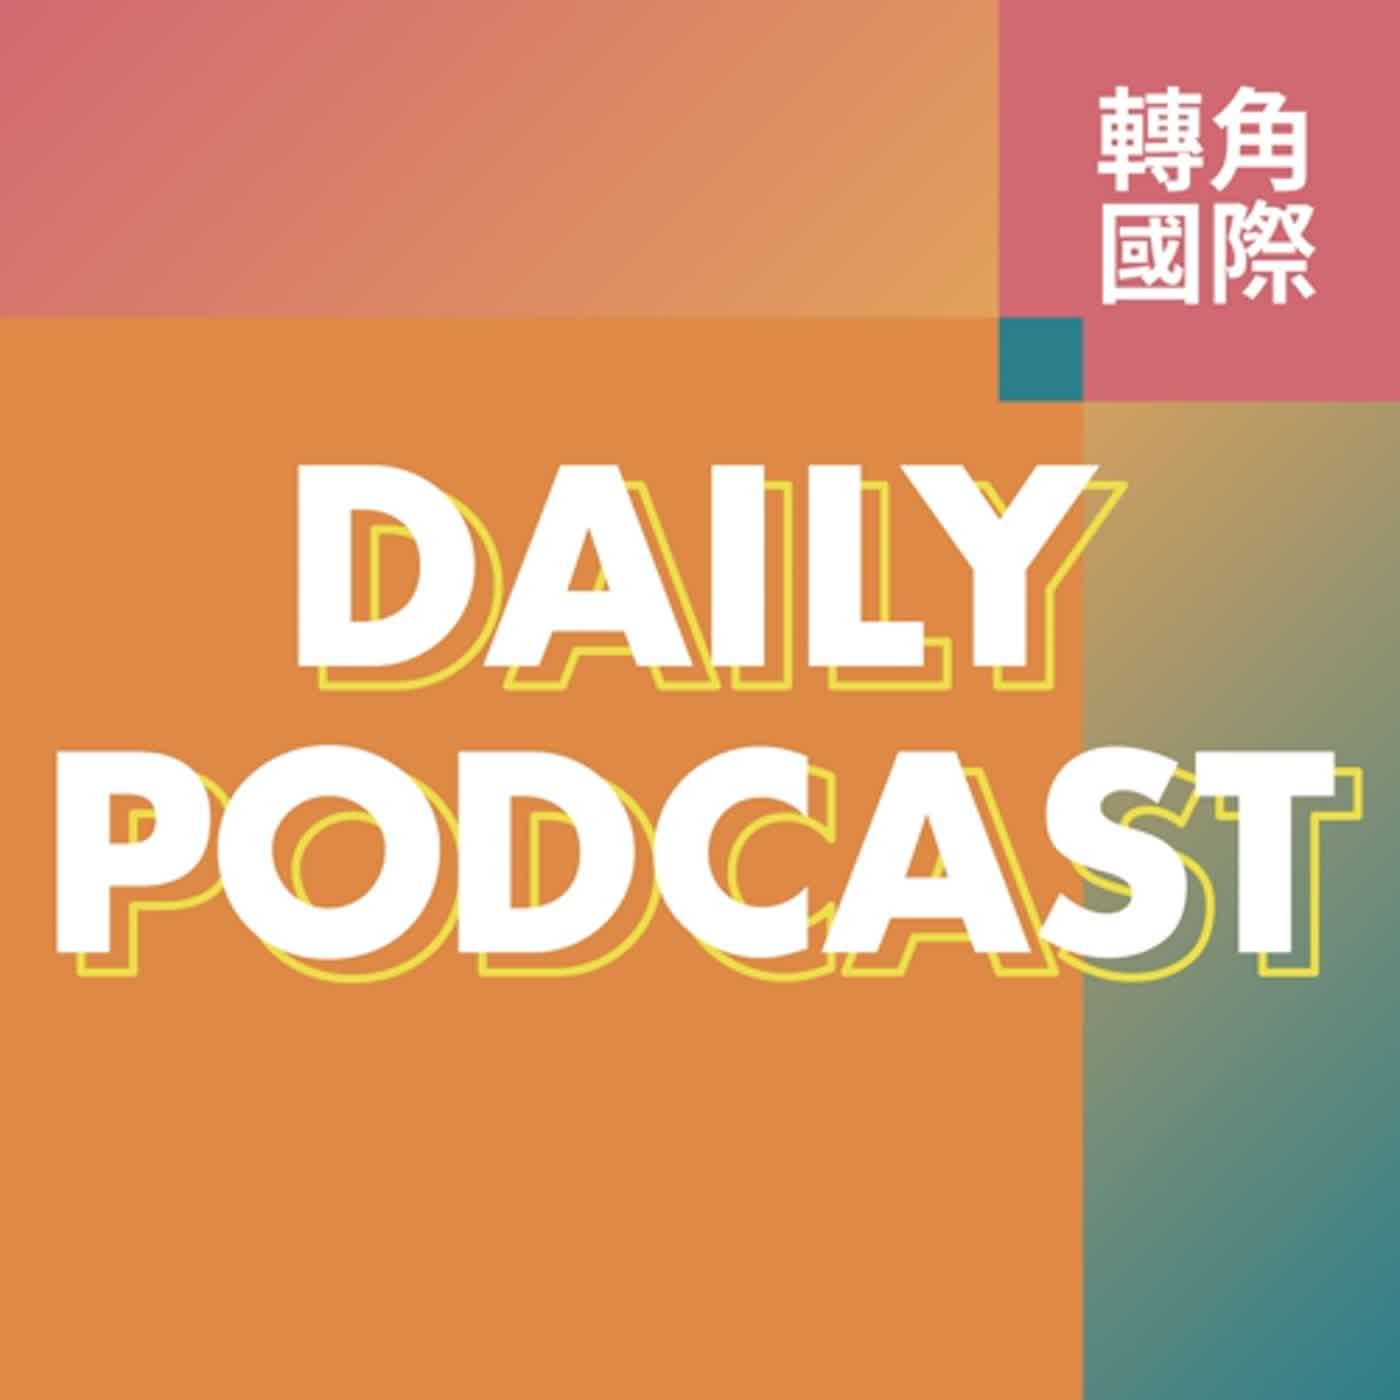 【通報】轉角國際daily podcast又遇到Apple podcast更新問題，已處理中